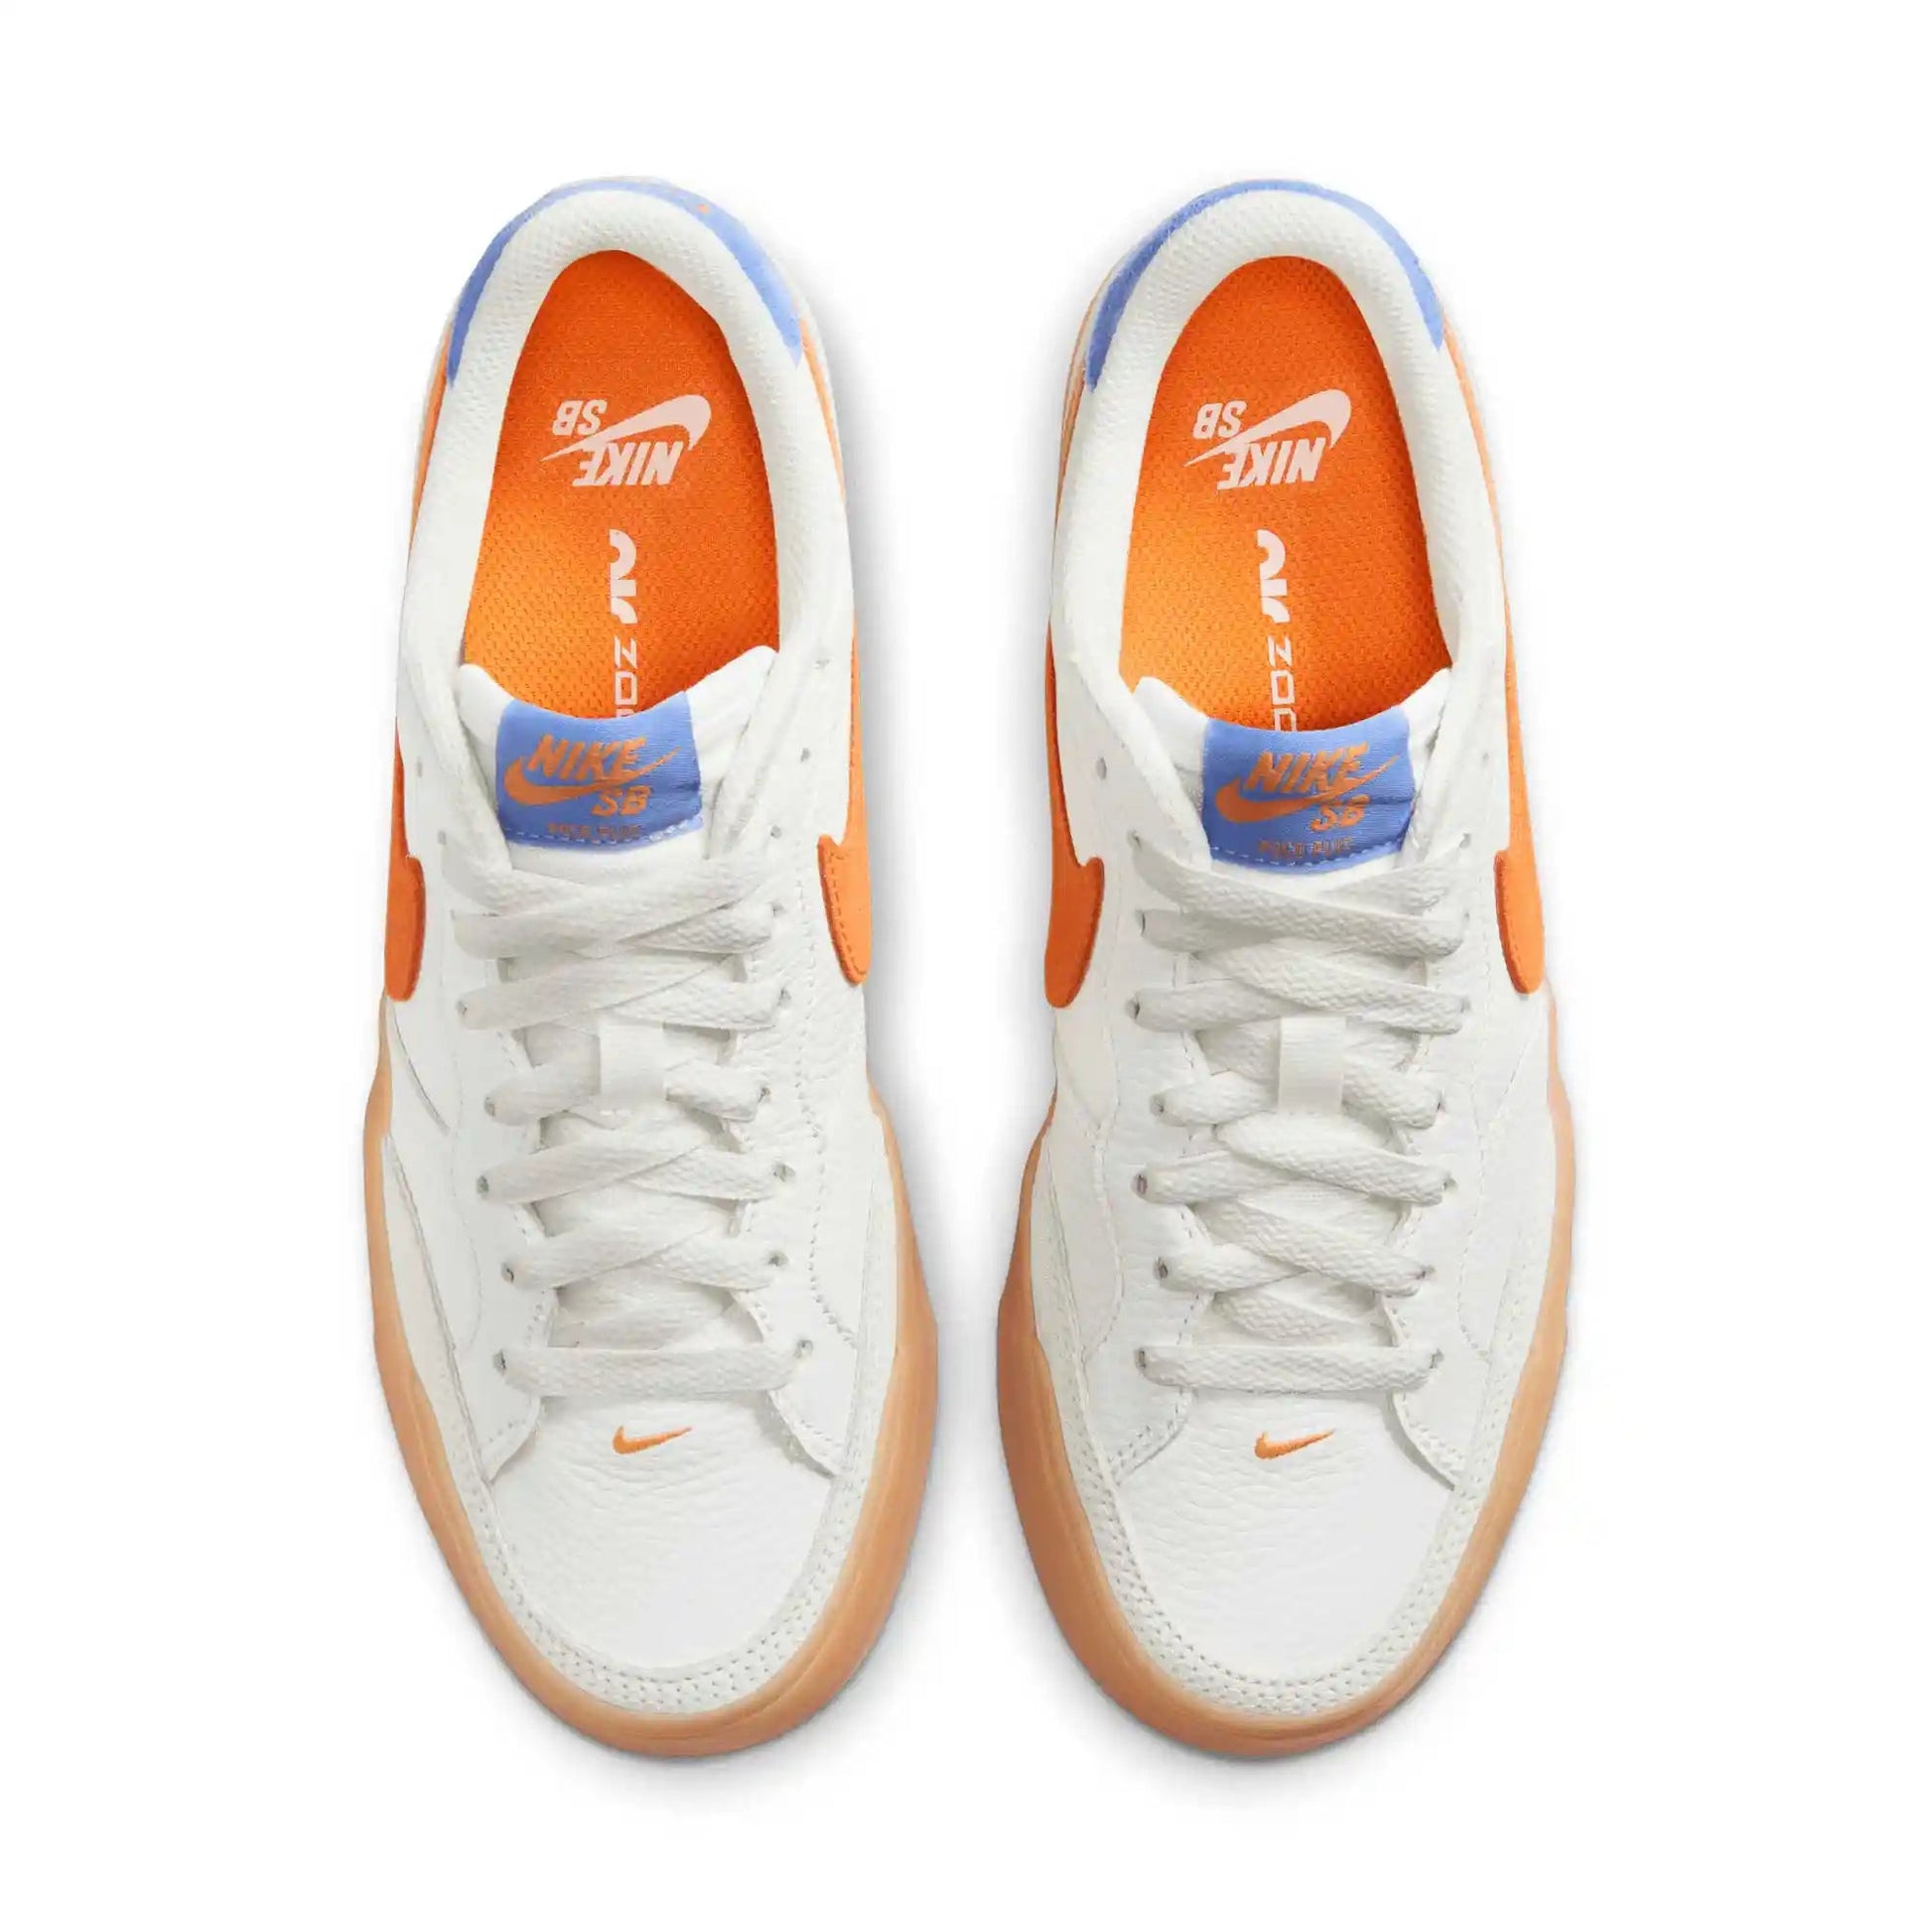 Nike SB Zoom Pogo Plus Premium, summit white/bright mandarin - Tiki Room Skateboards - 4